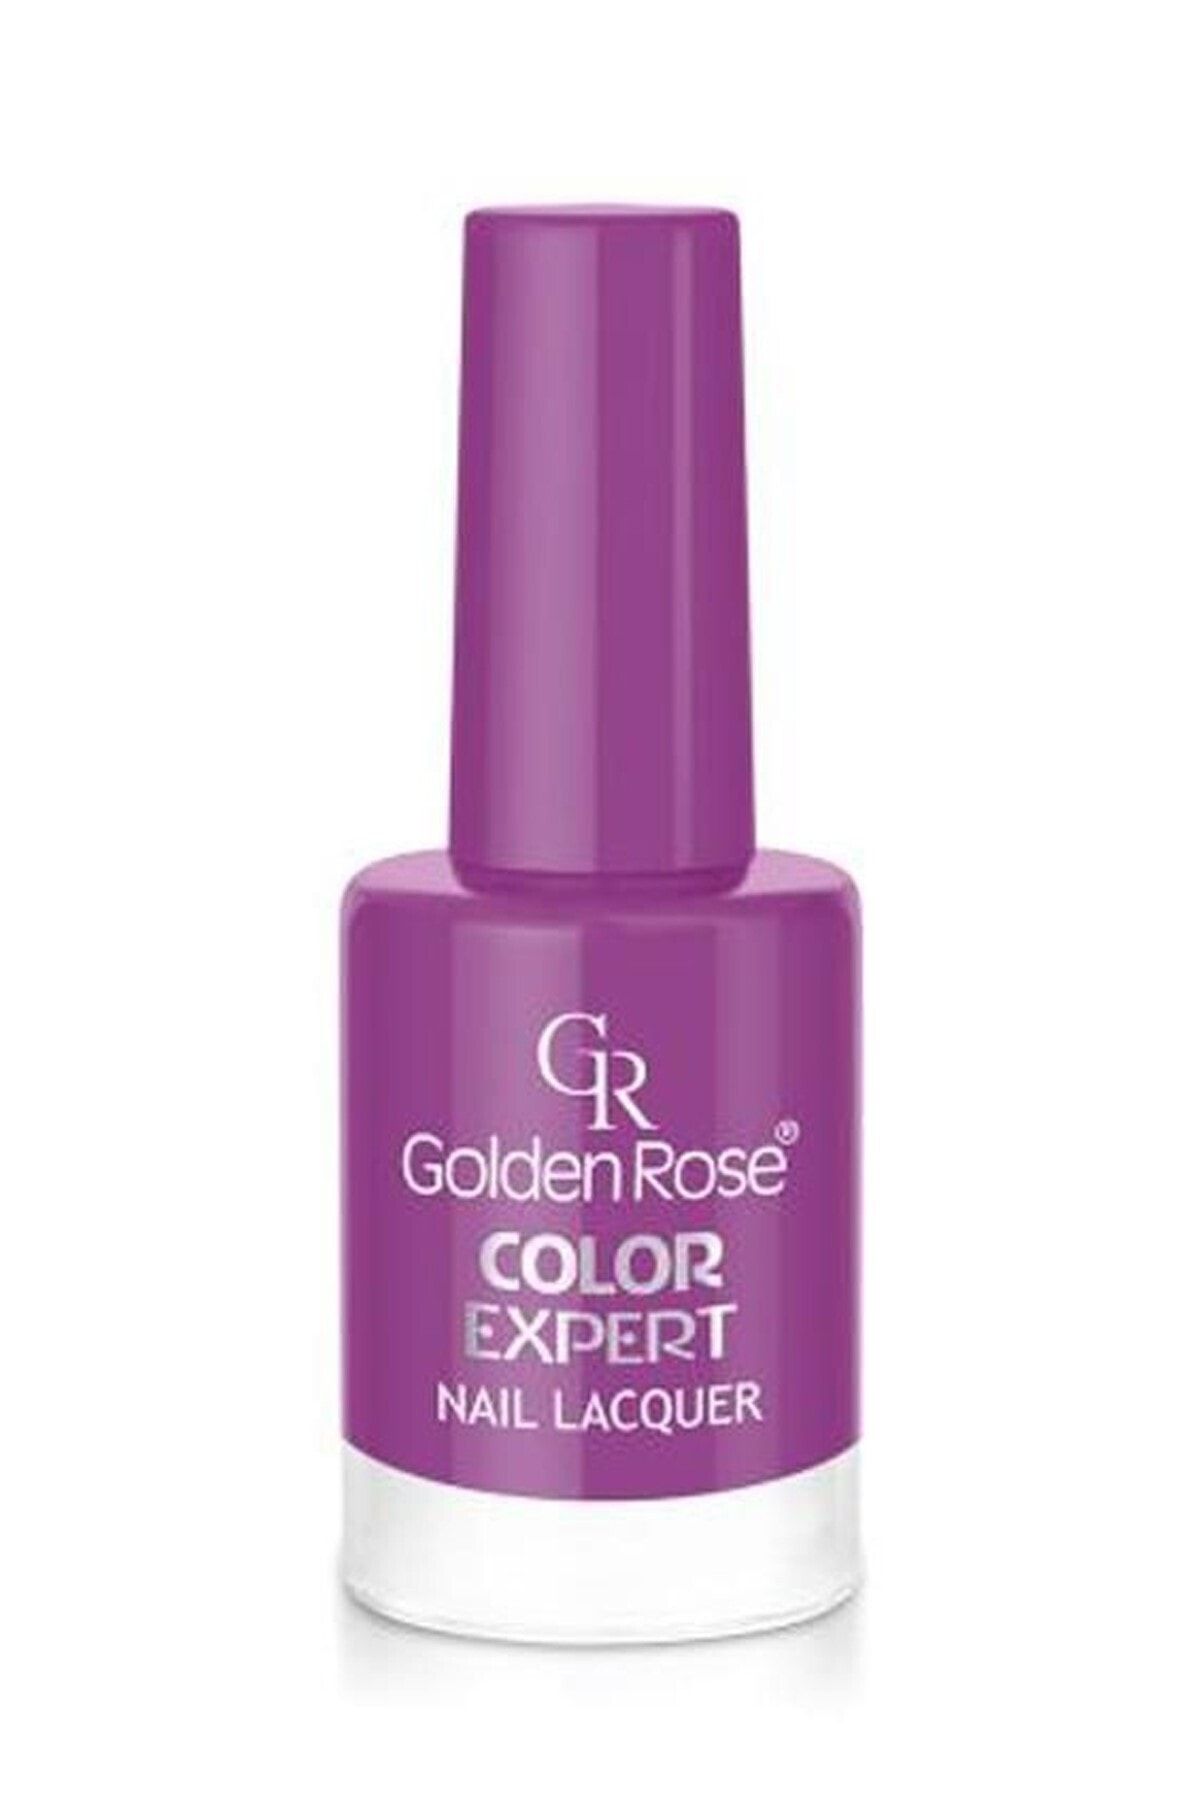 Golden Rose Oje - Color Expert Nail Lacquer No: 40 8691190703400